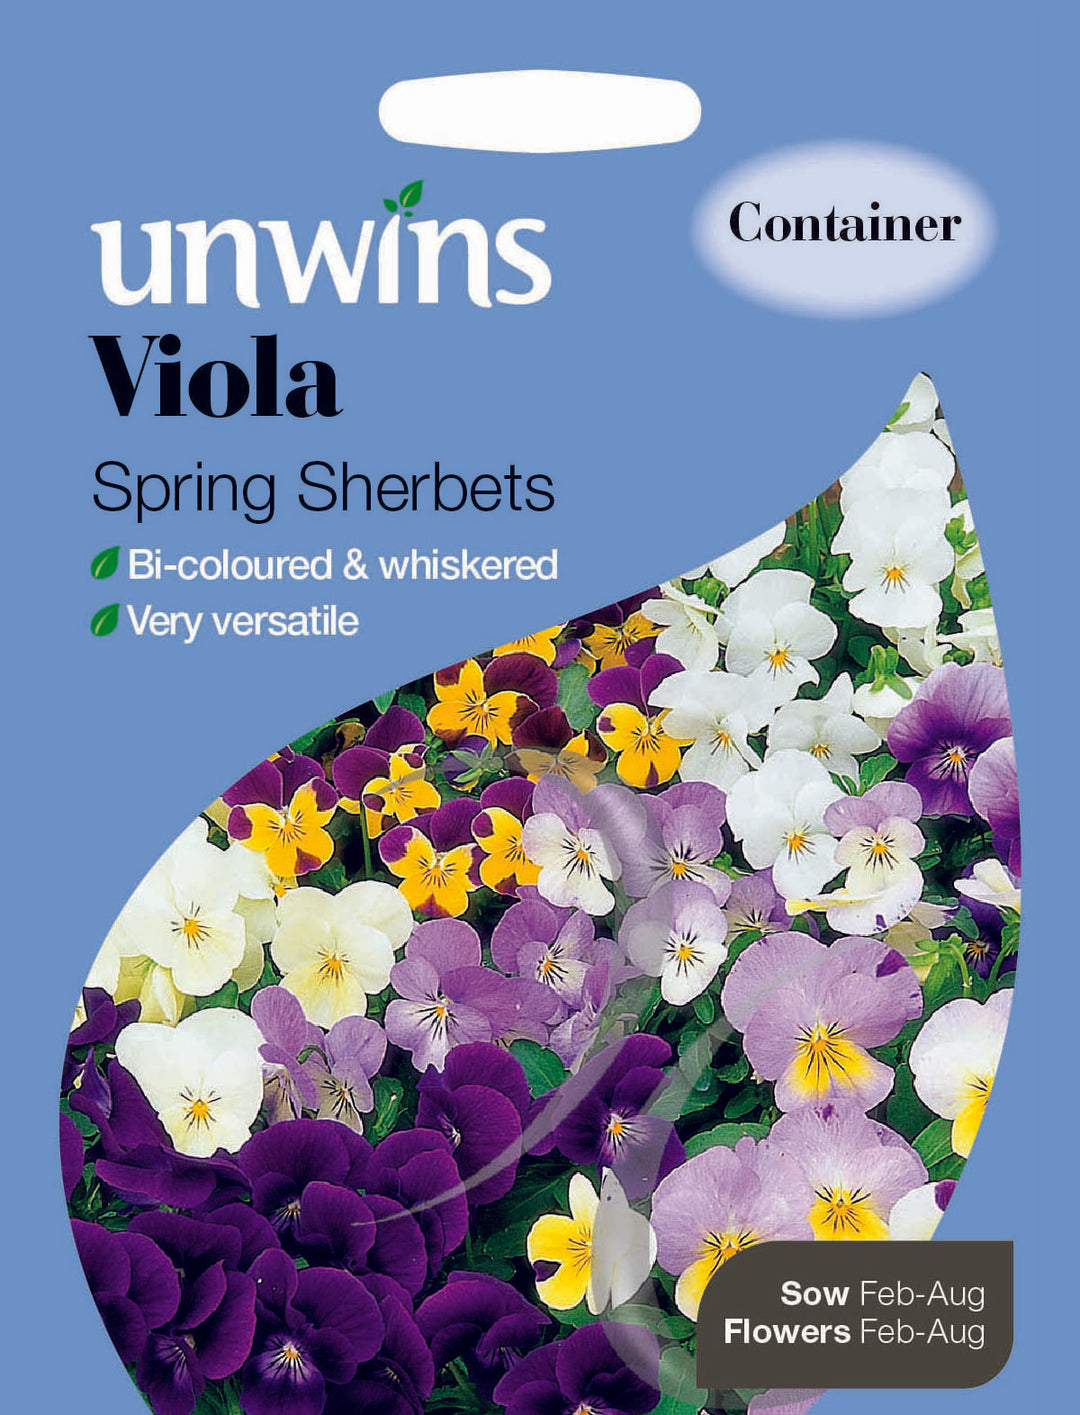 Viola Spring Sherbets